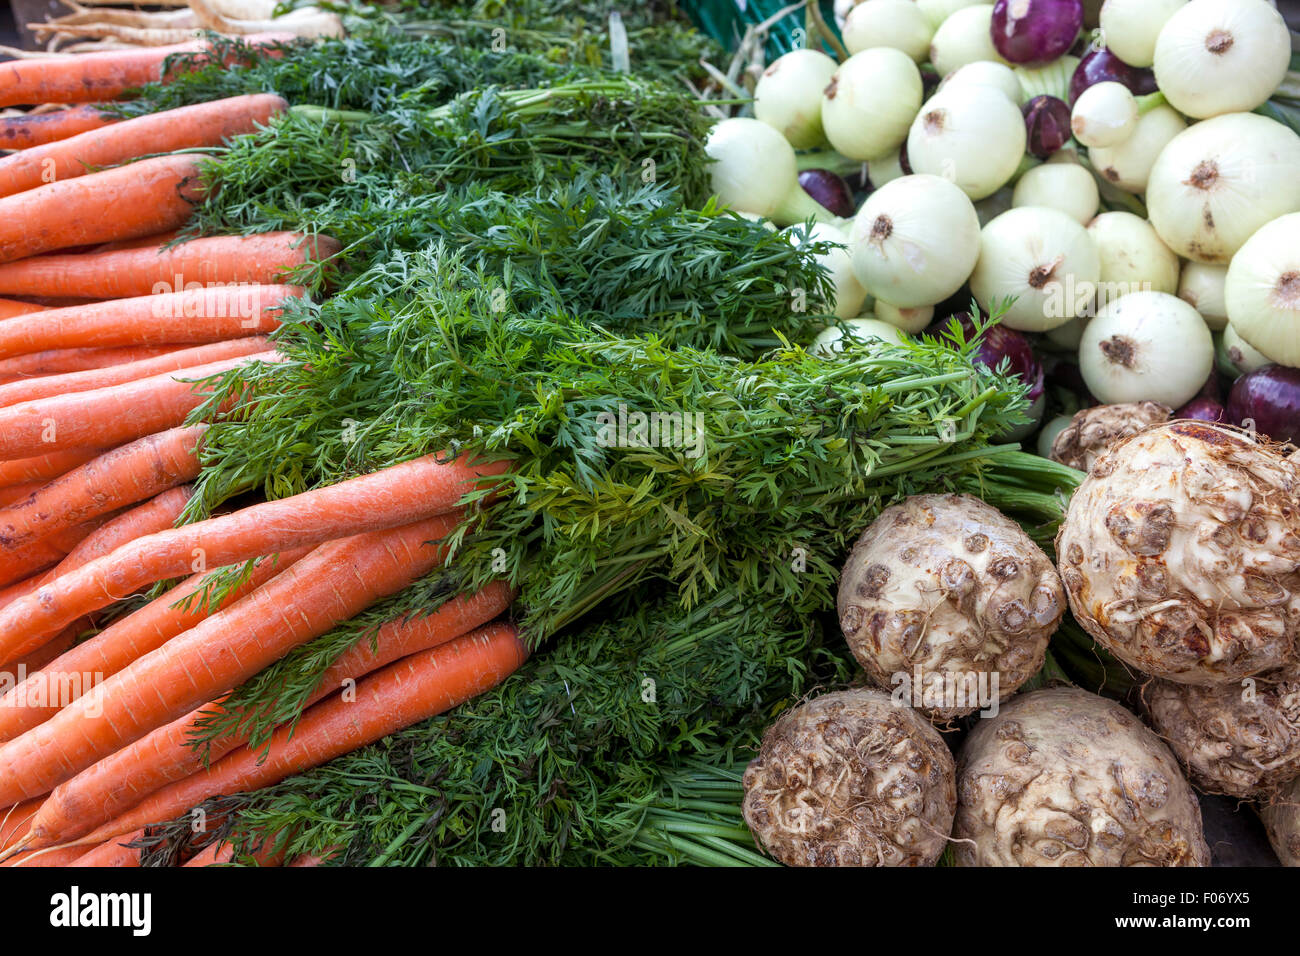 Karotten, Karotten, Sellerie, Zwiebel, Karotten Farmers Market Stockfoto